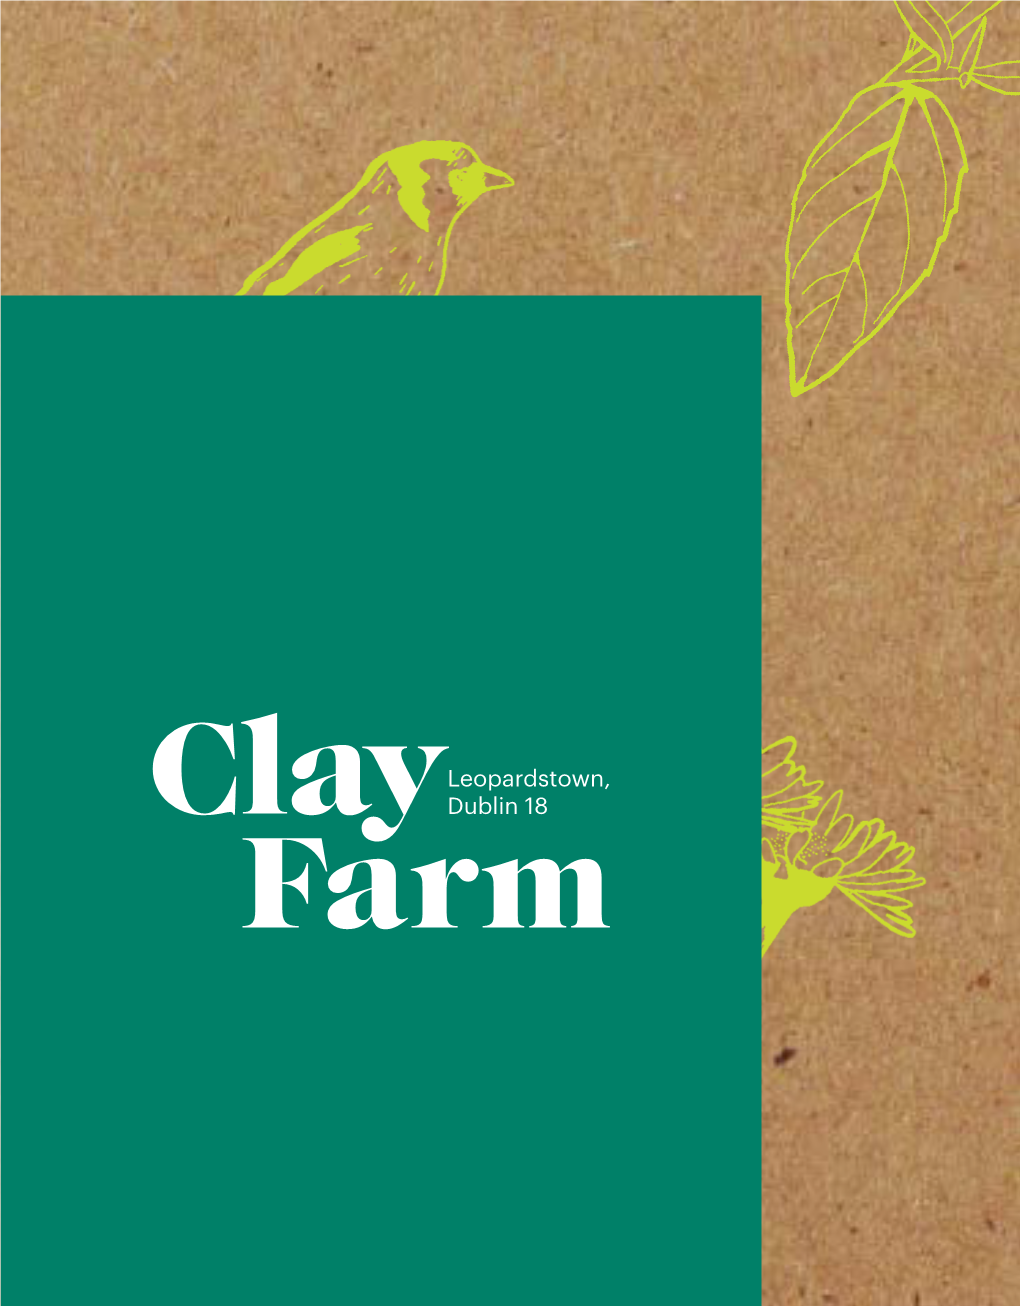 Clay Farm, Leopardstown, Dublin 18